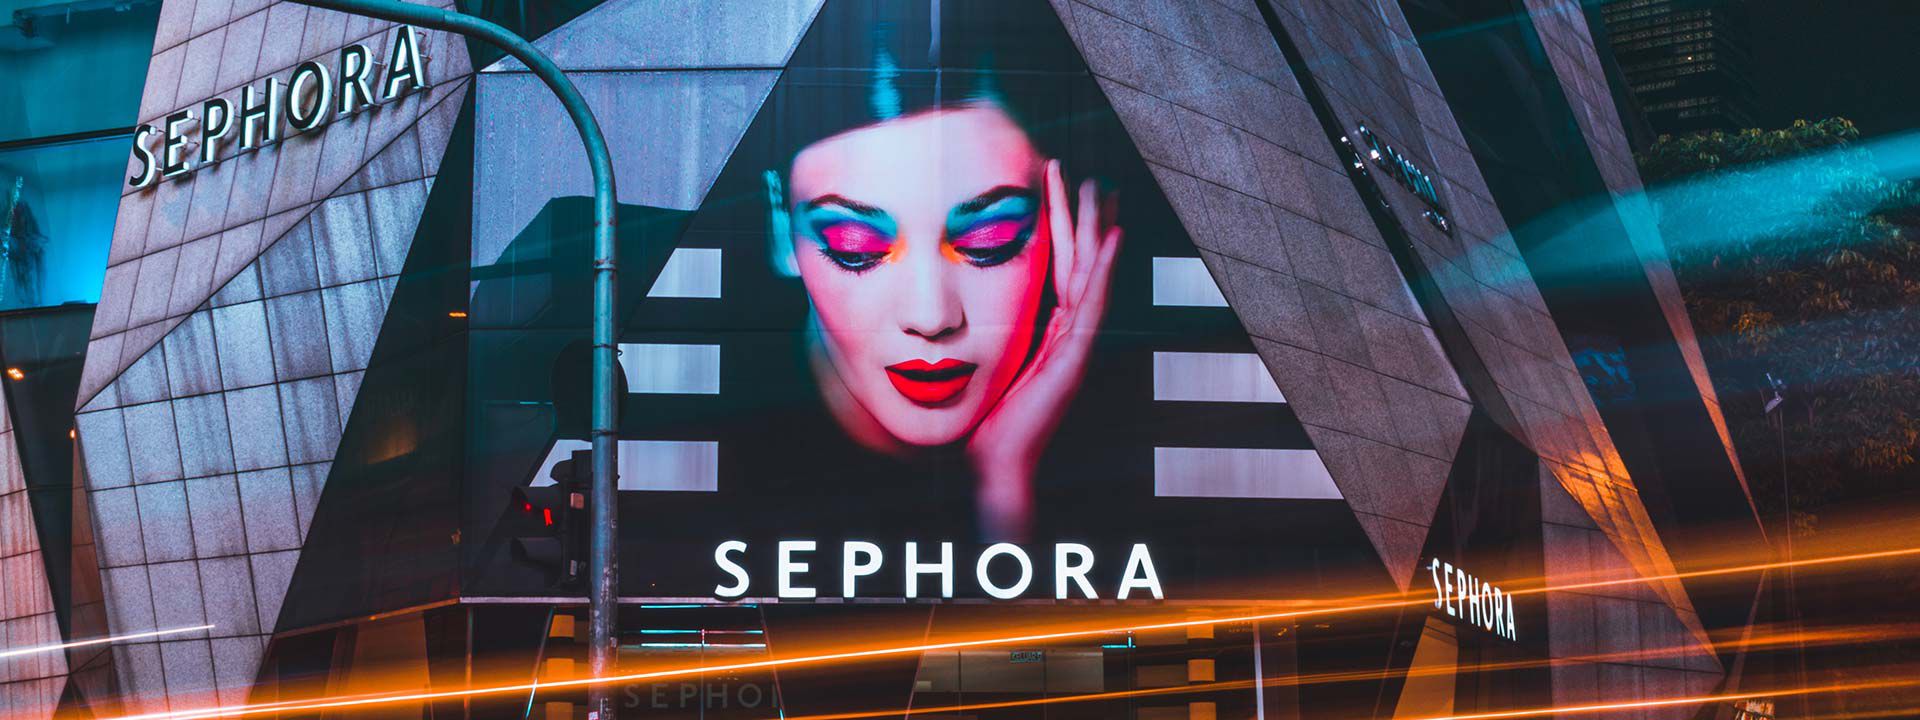 Sephora Trains Brands to Become TikTok Stars